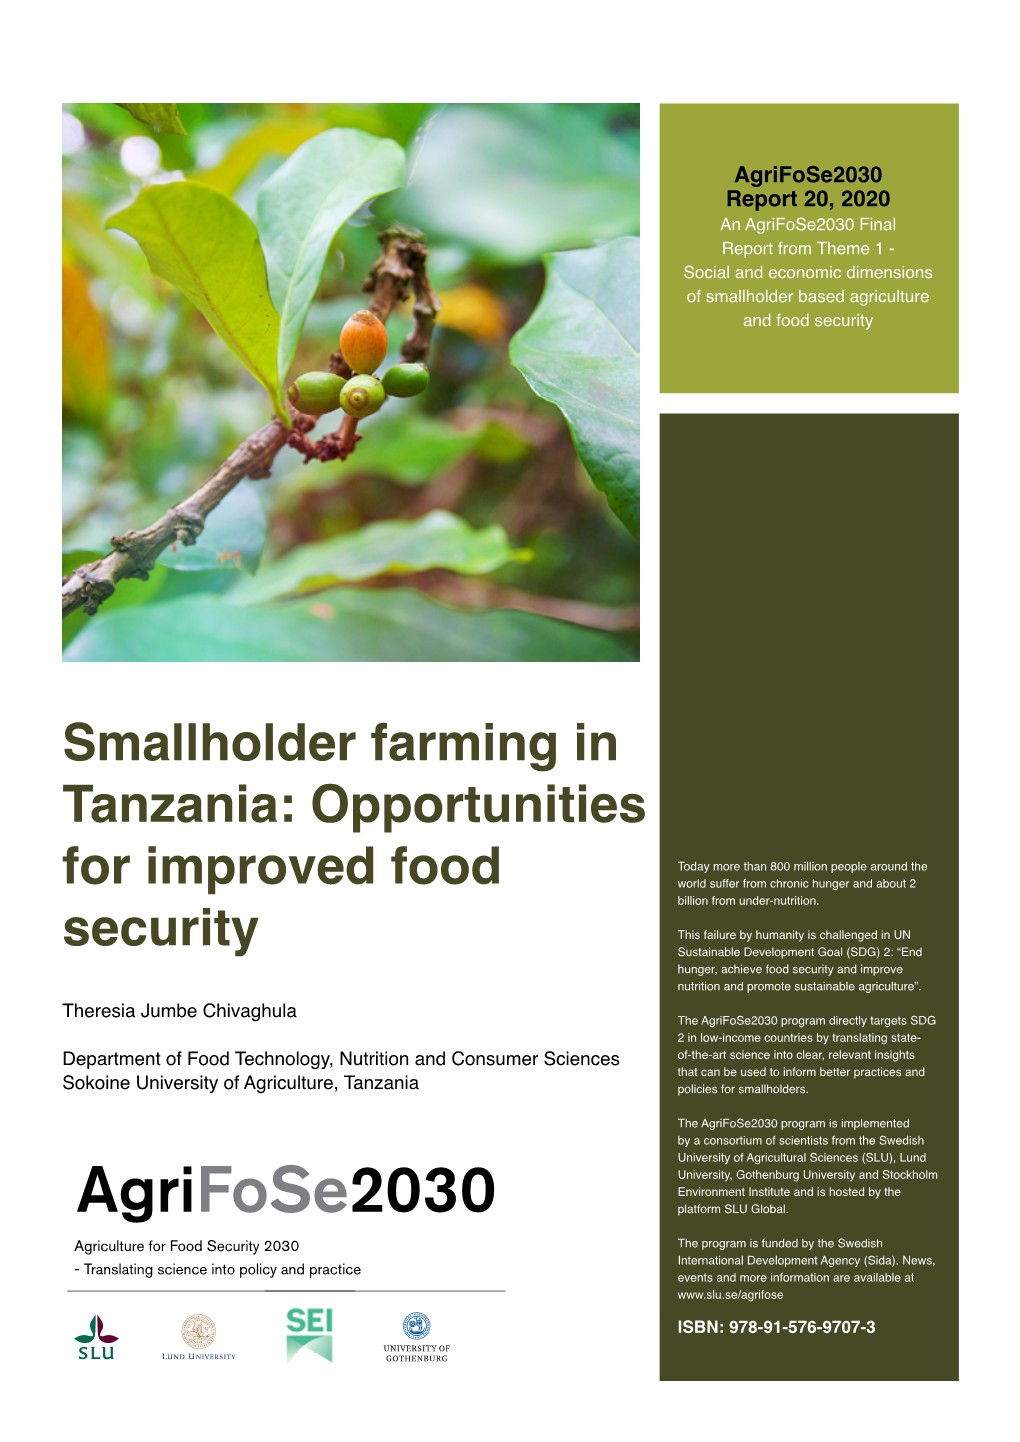 Smallholder Farming in Tanzania: Opportunities